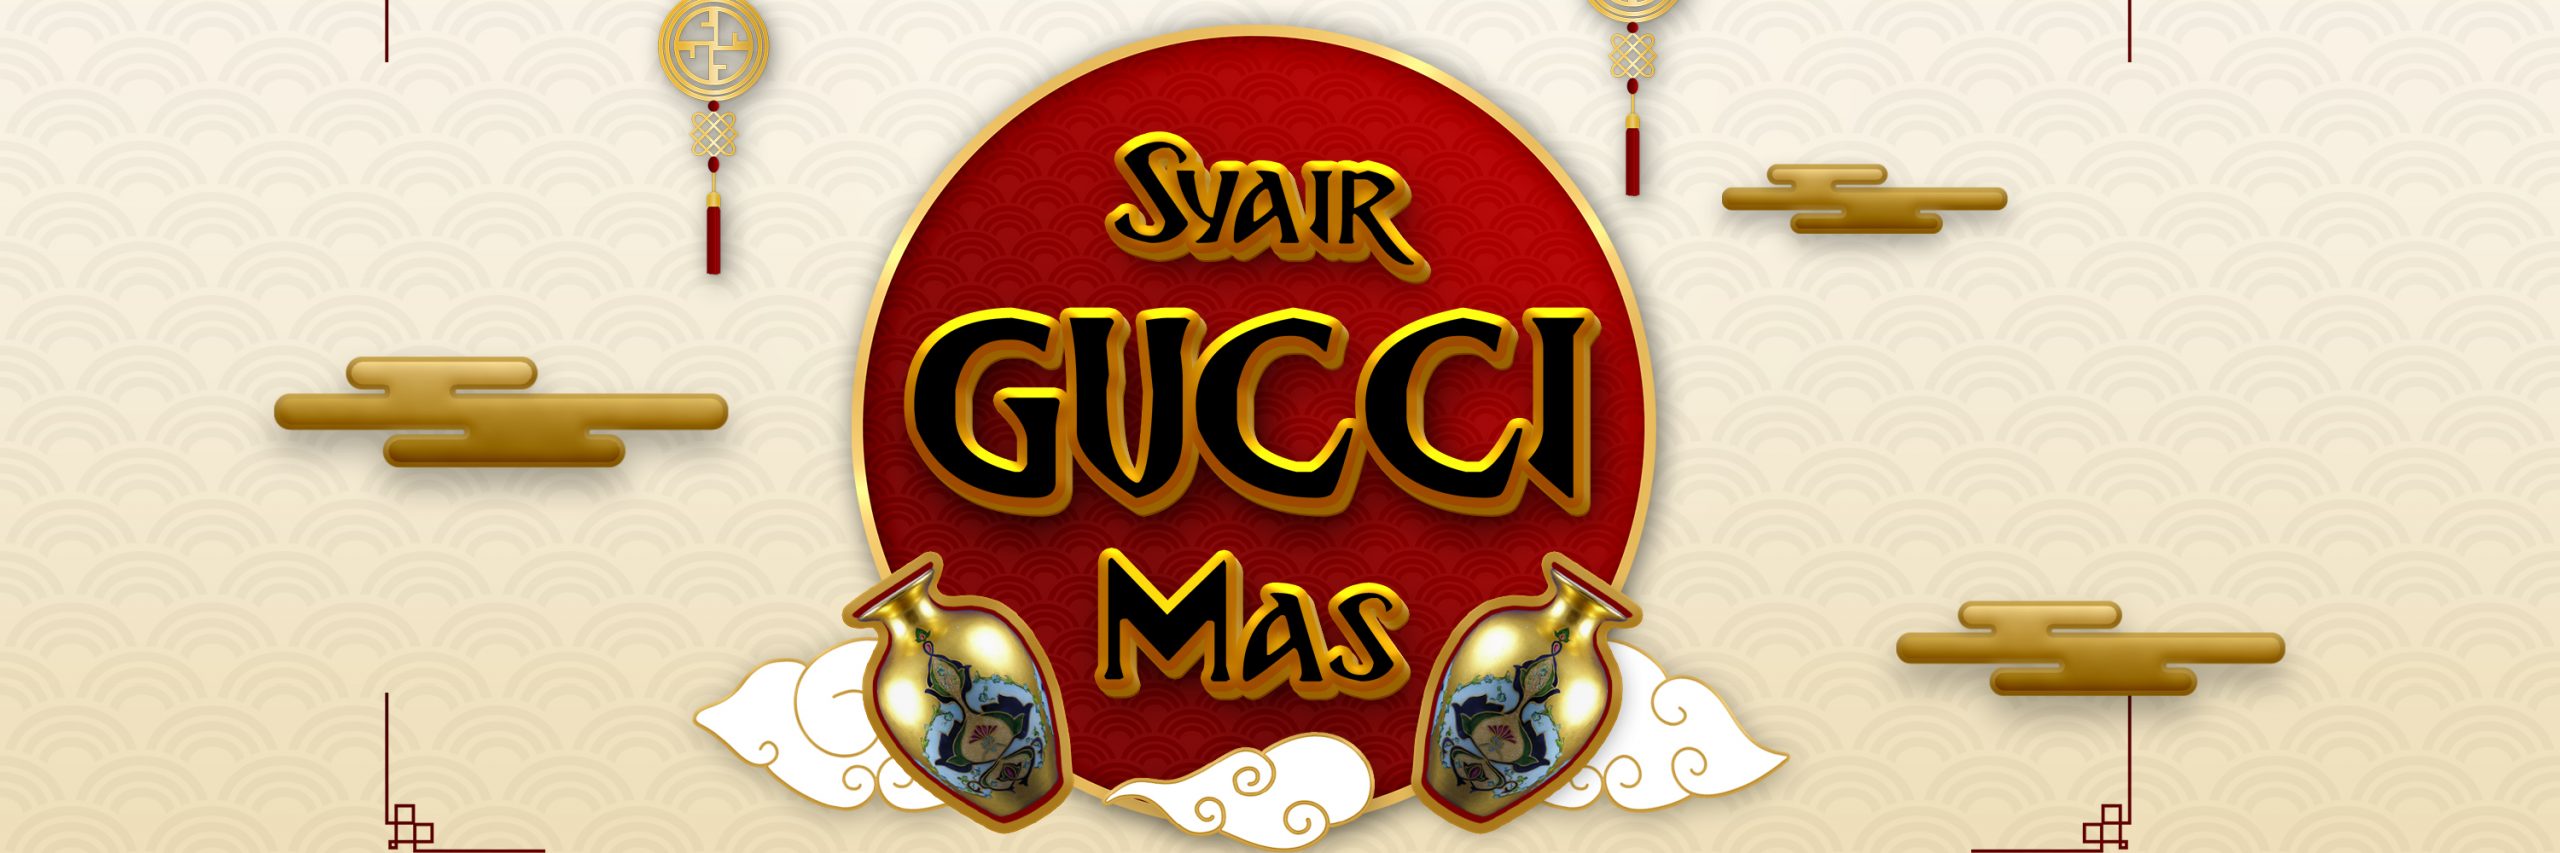 11+ Forum Syair Sgp Gucci Mas